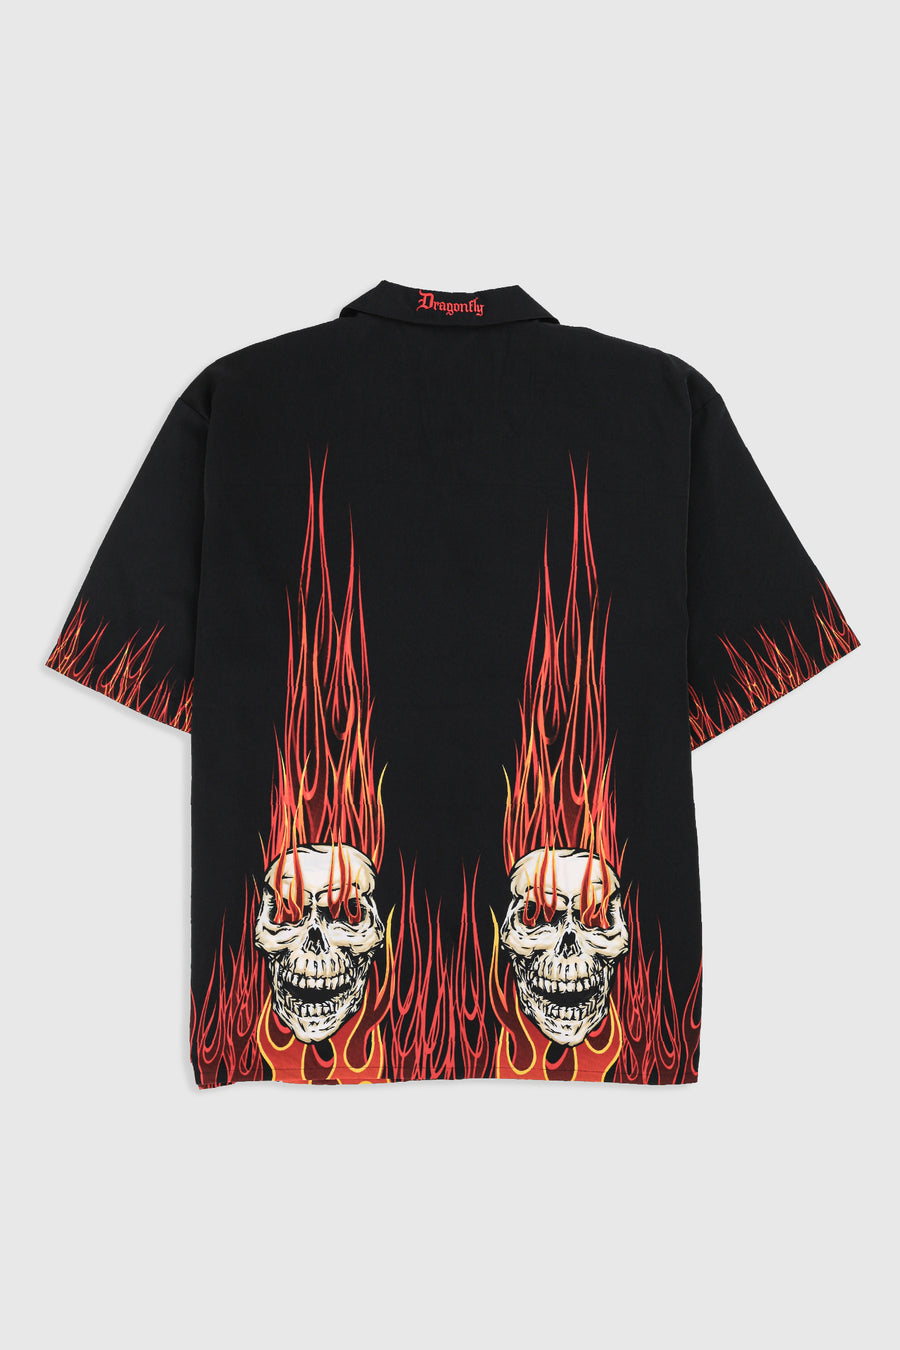 Deadstock Dragonfly Burning Skulls Camp Shirt - XXXL